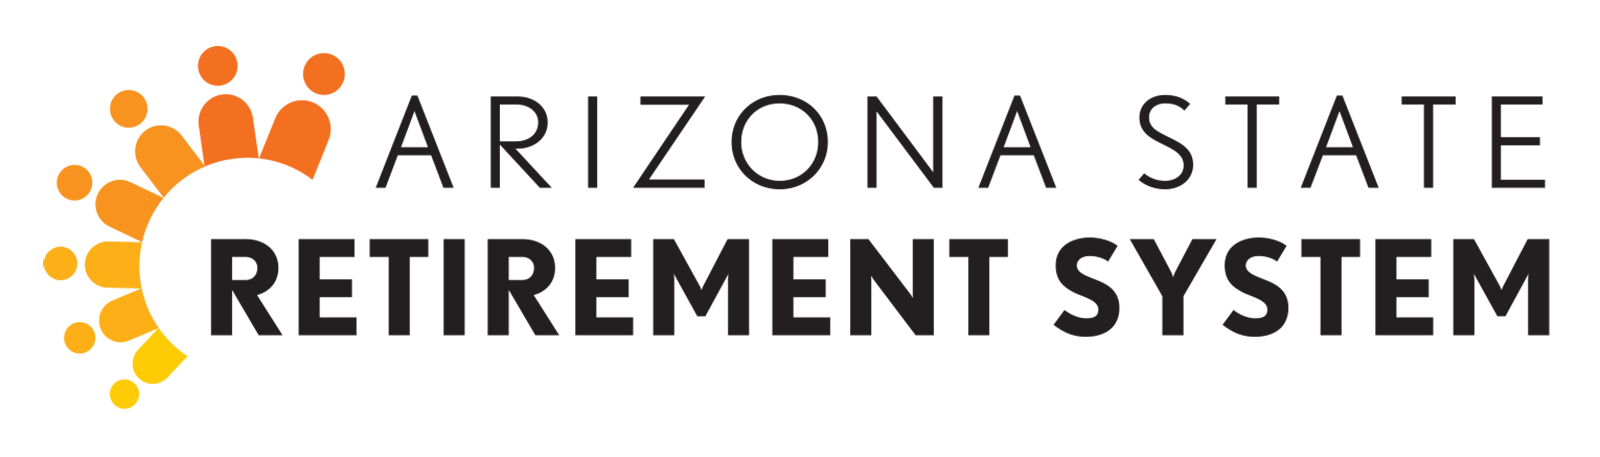 Arizona State Retirement System enrollees landing page 